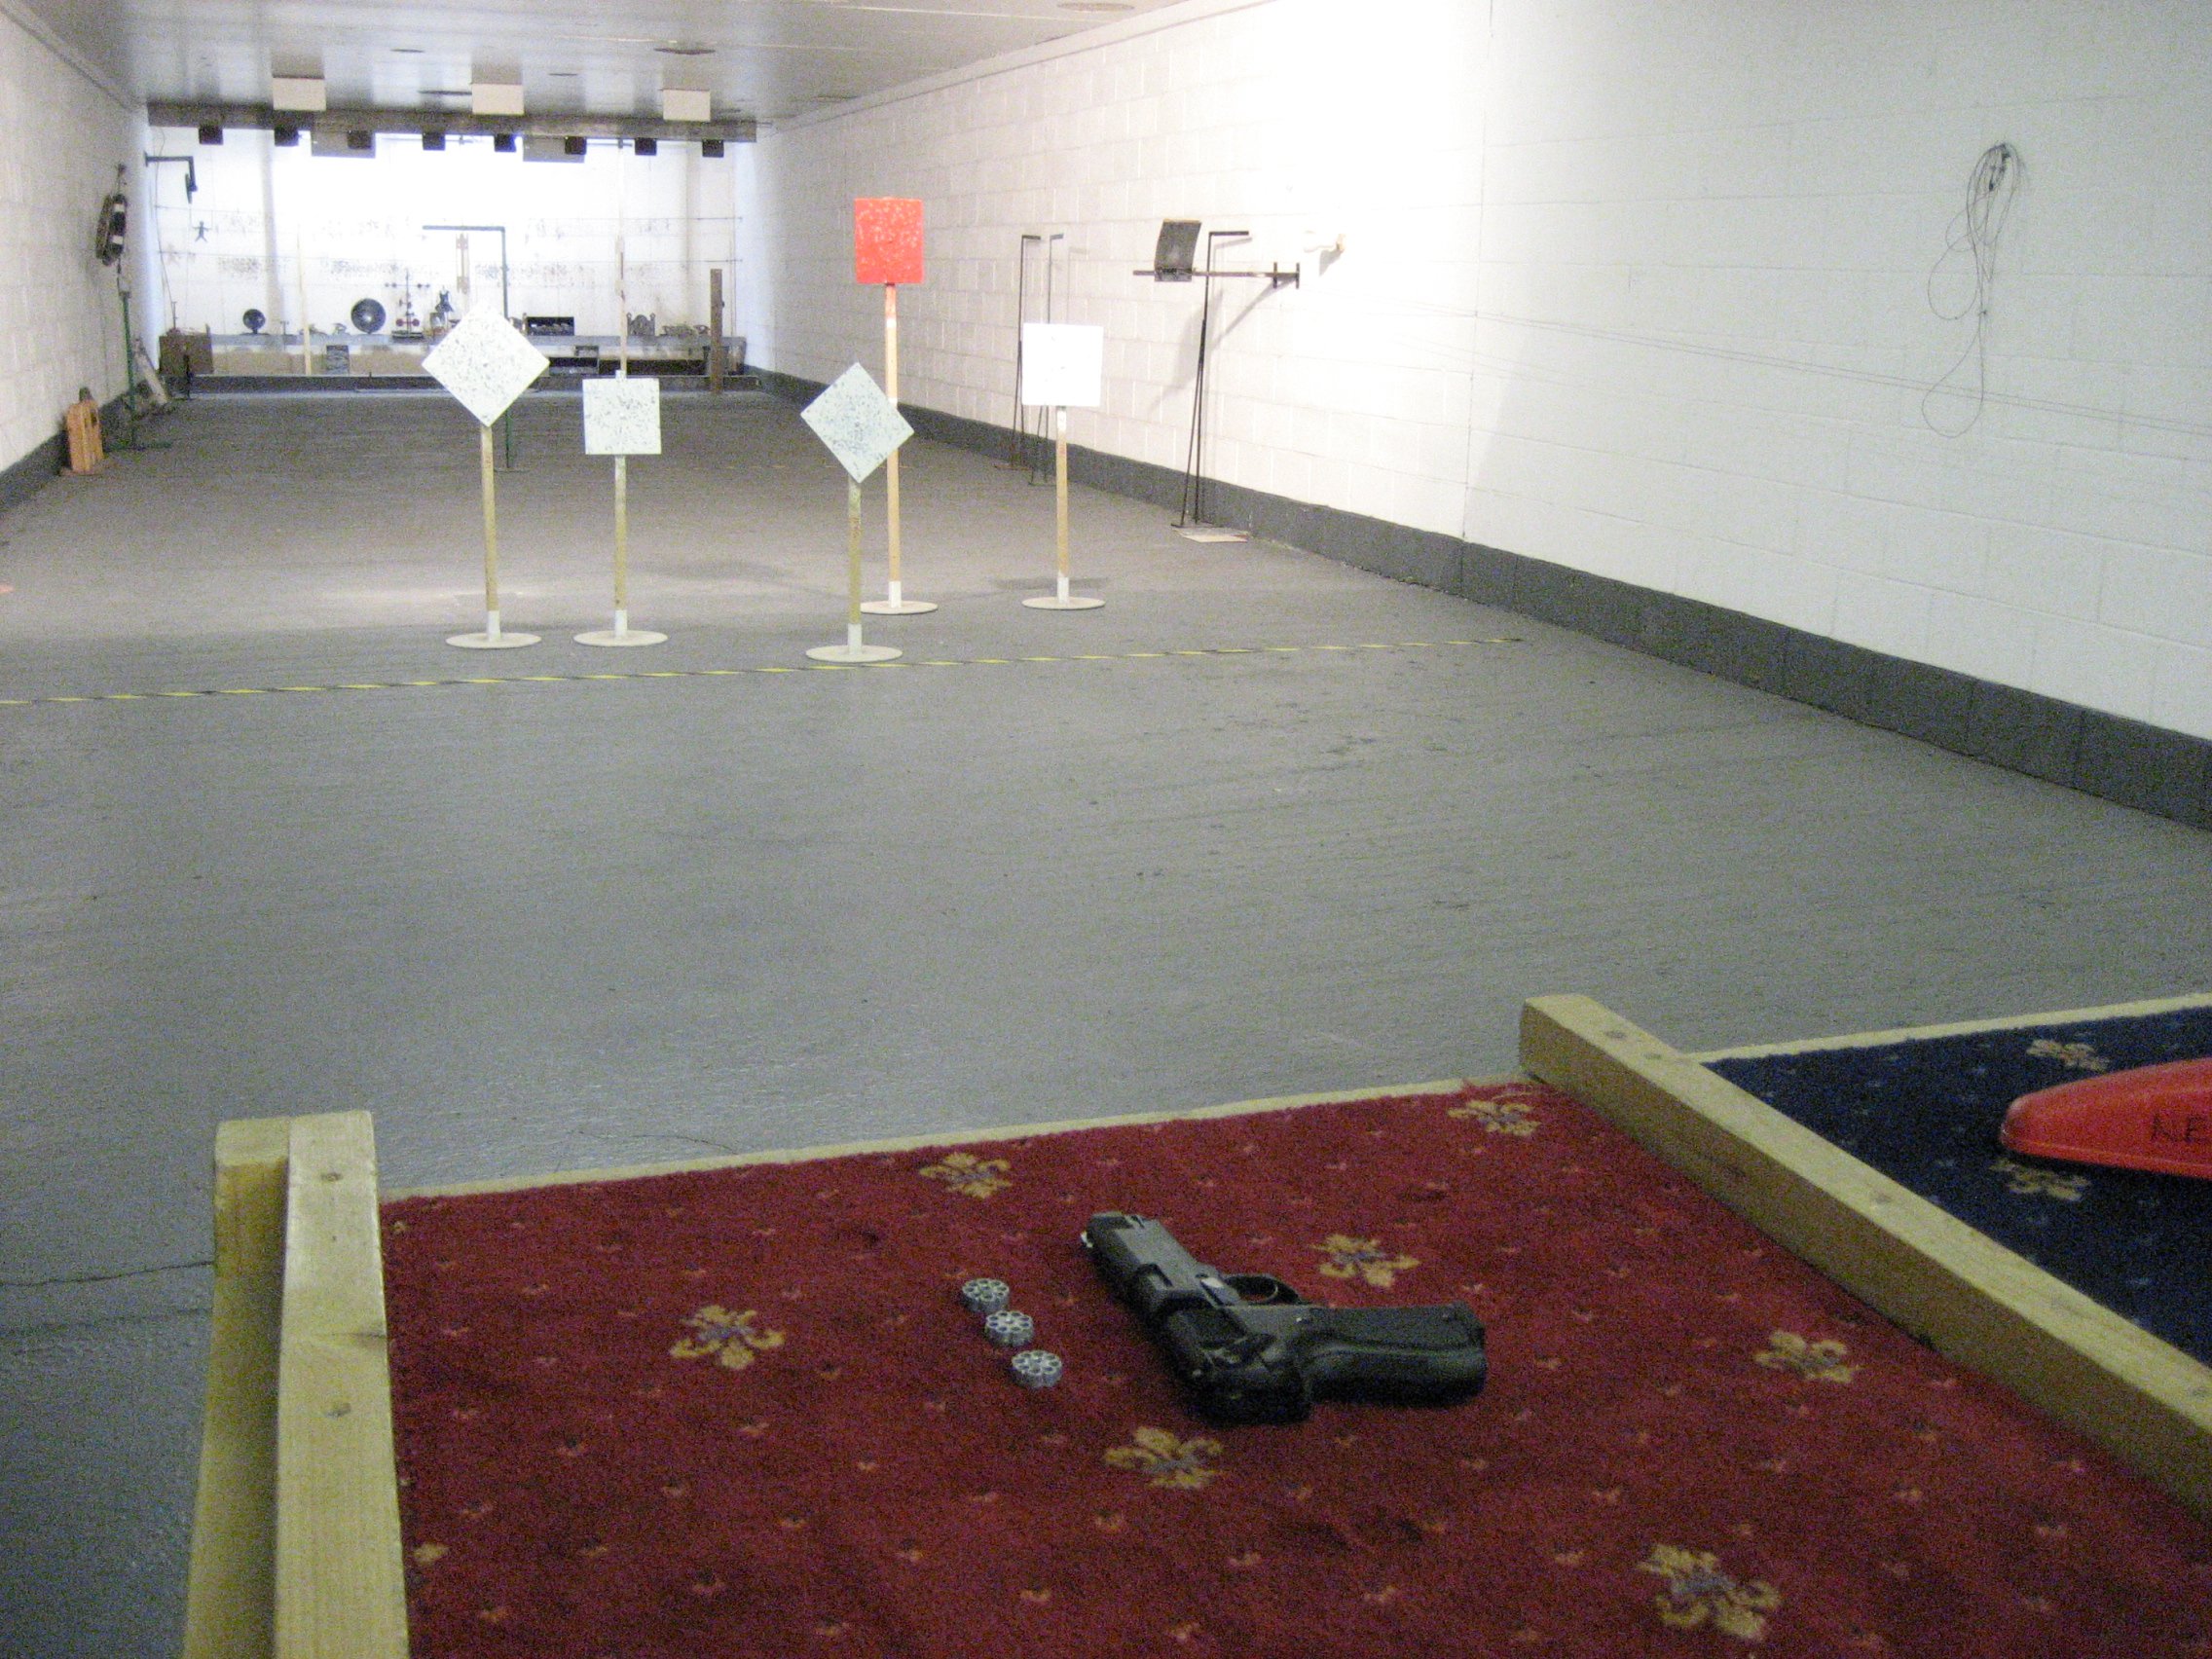 Seated indoor target range at NE Lincs Target Club